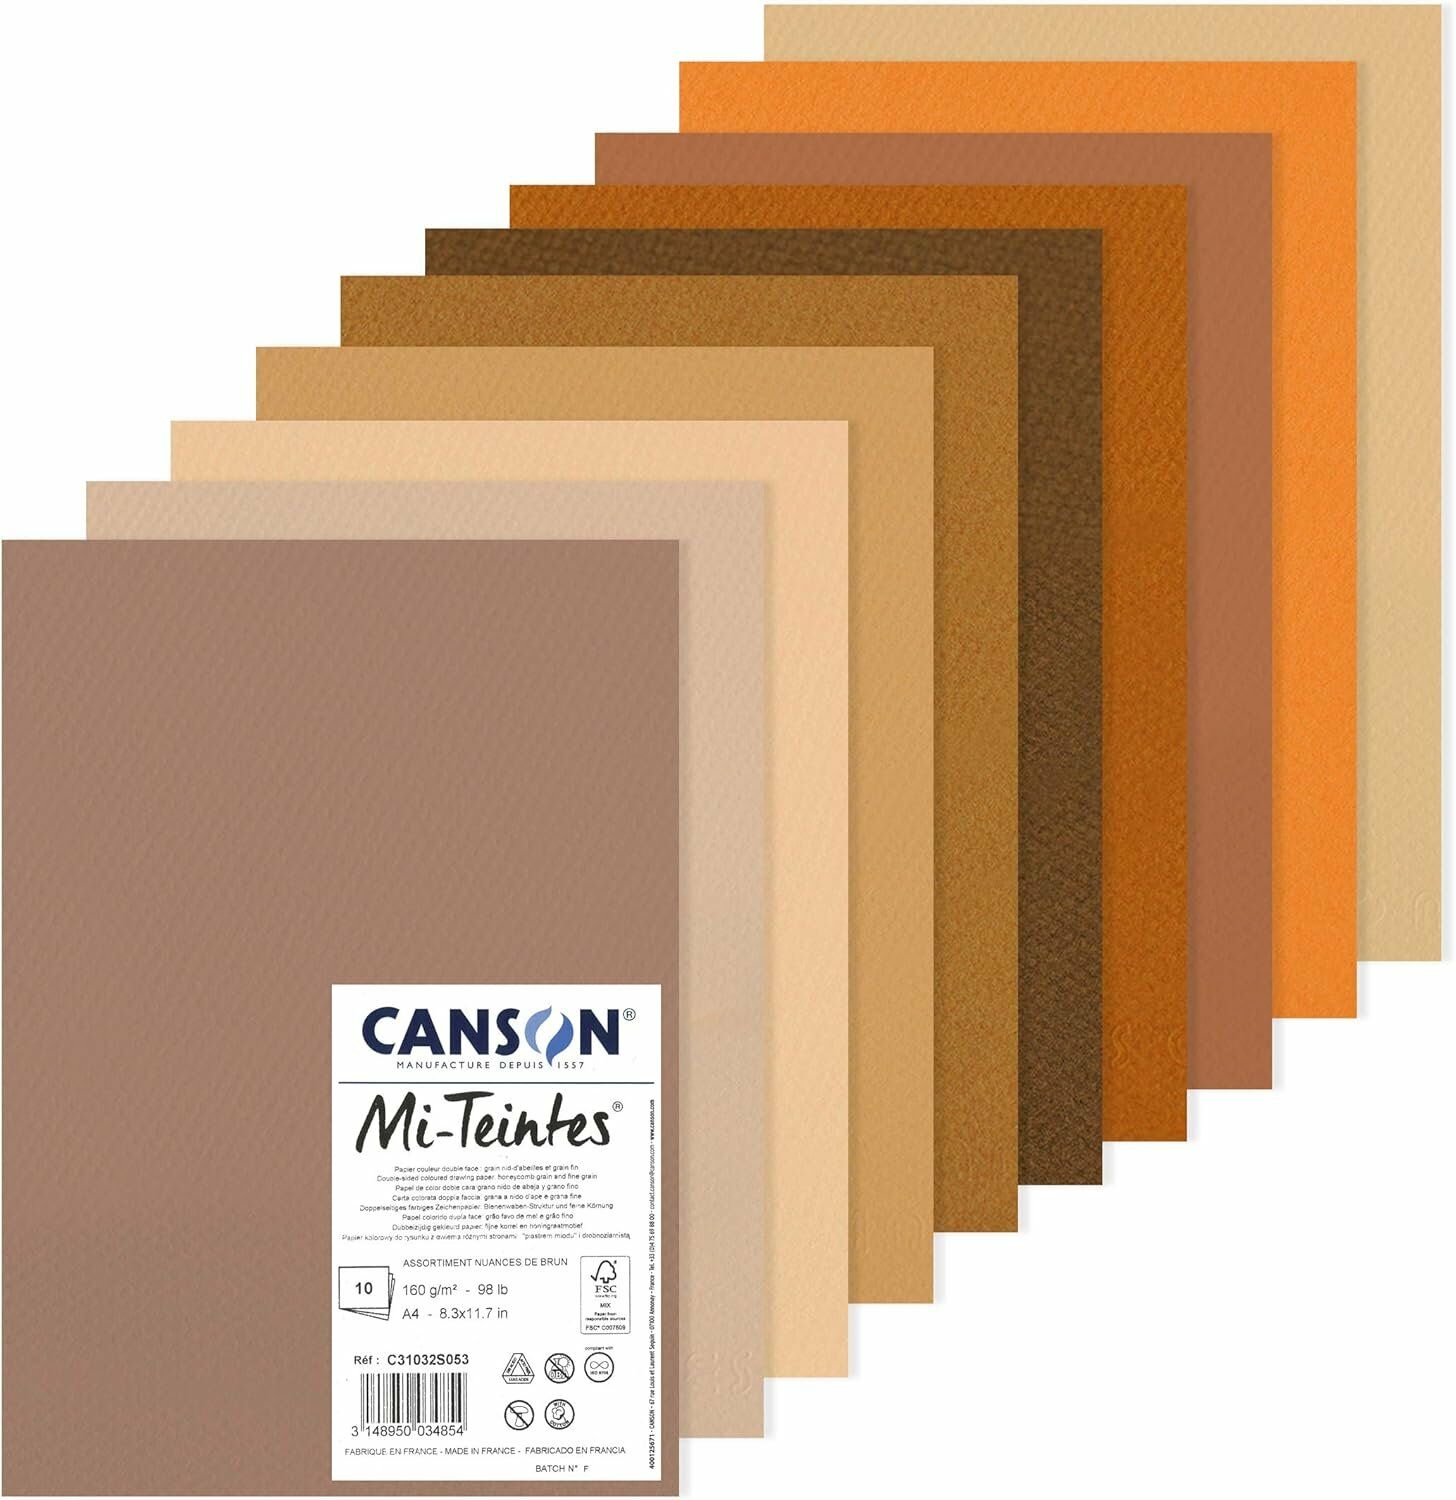 CANSON Mi-Teintes 160gr A4 Renkli Çizim Kağıt Petek ve İnce Dokulu 10 Adet Toprak (Brown) Renkler